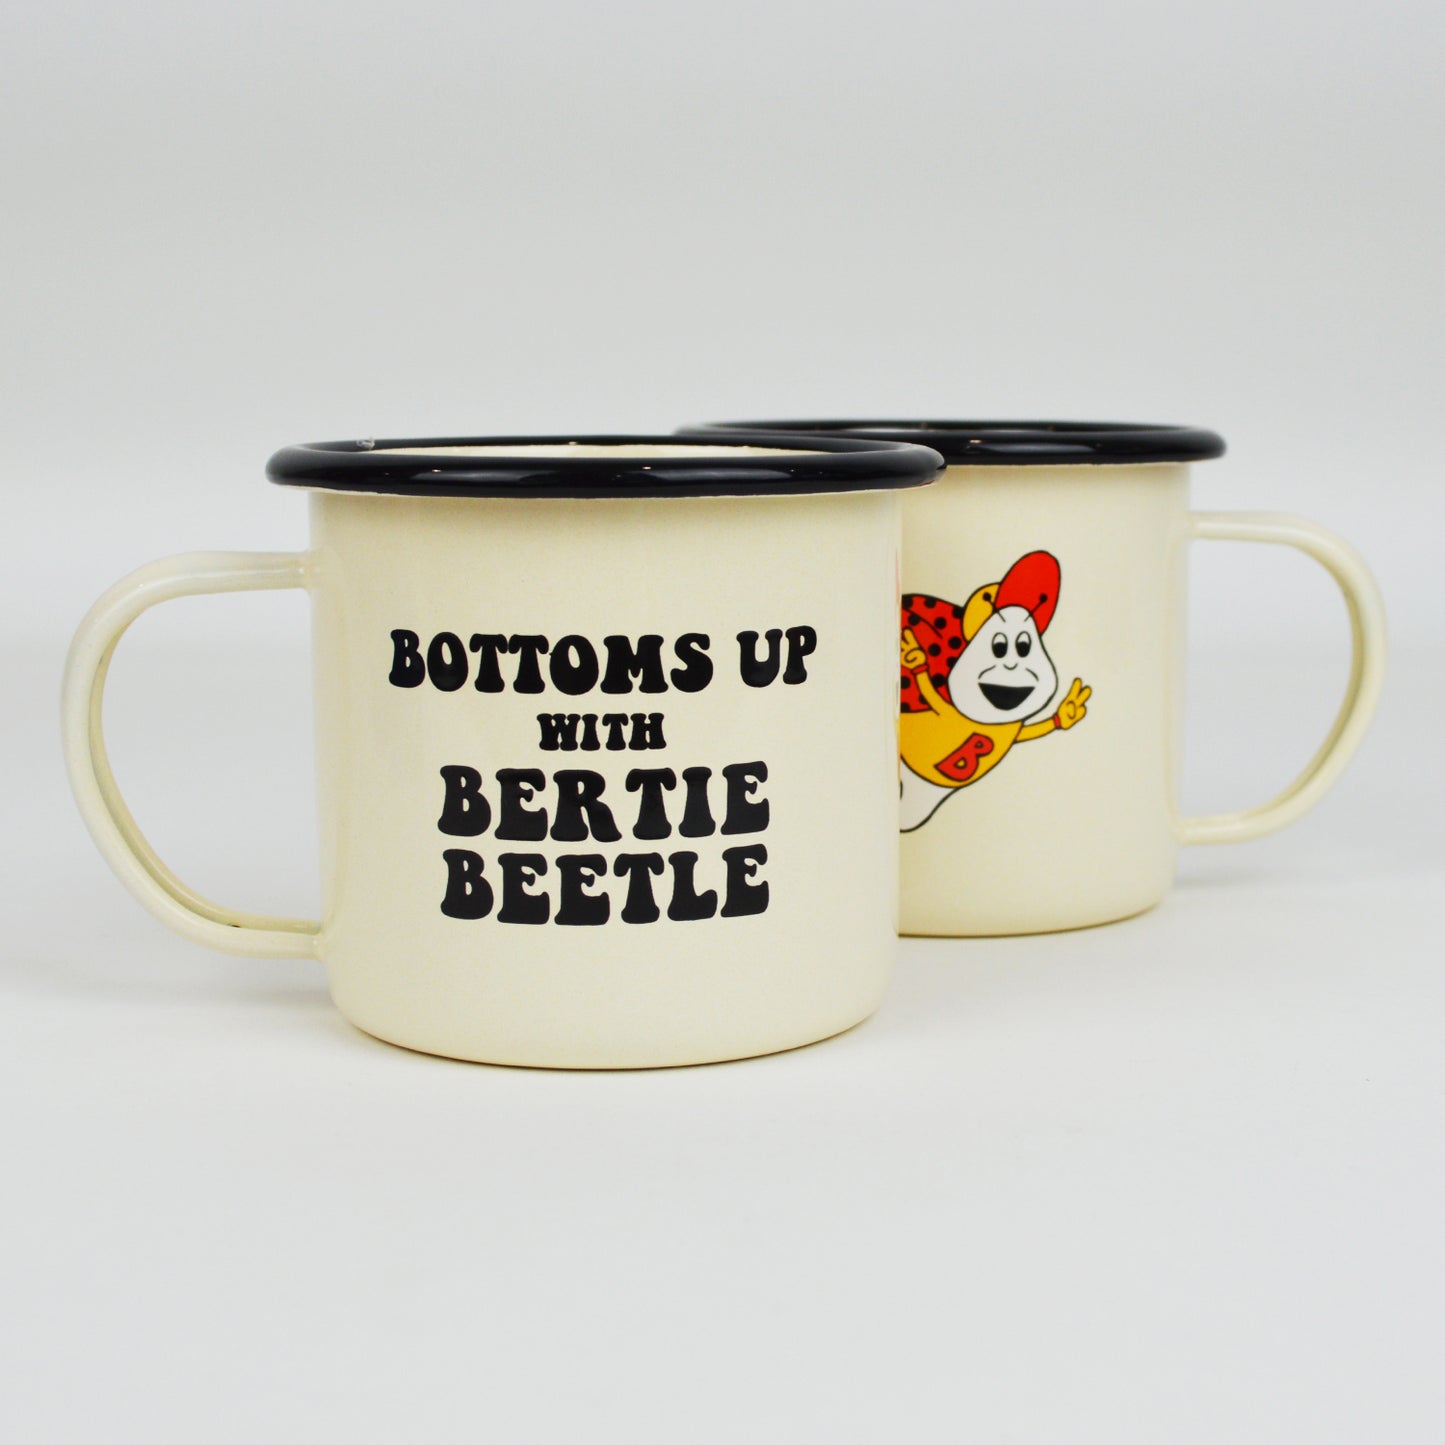 Bertie Beetle Retro Camping Mug Set